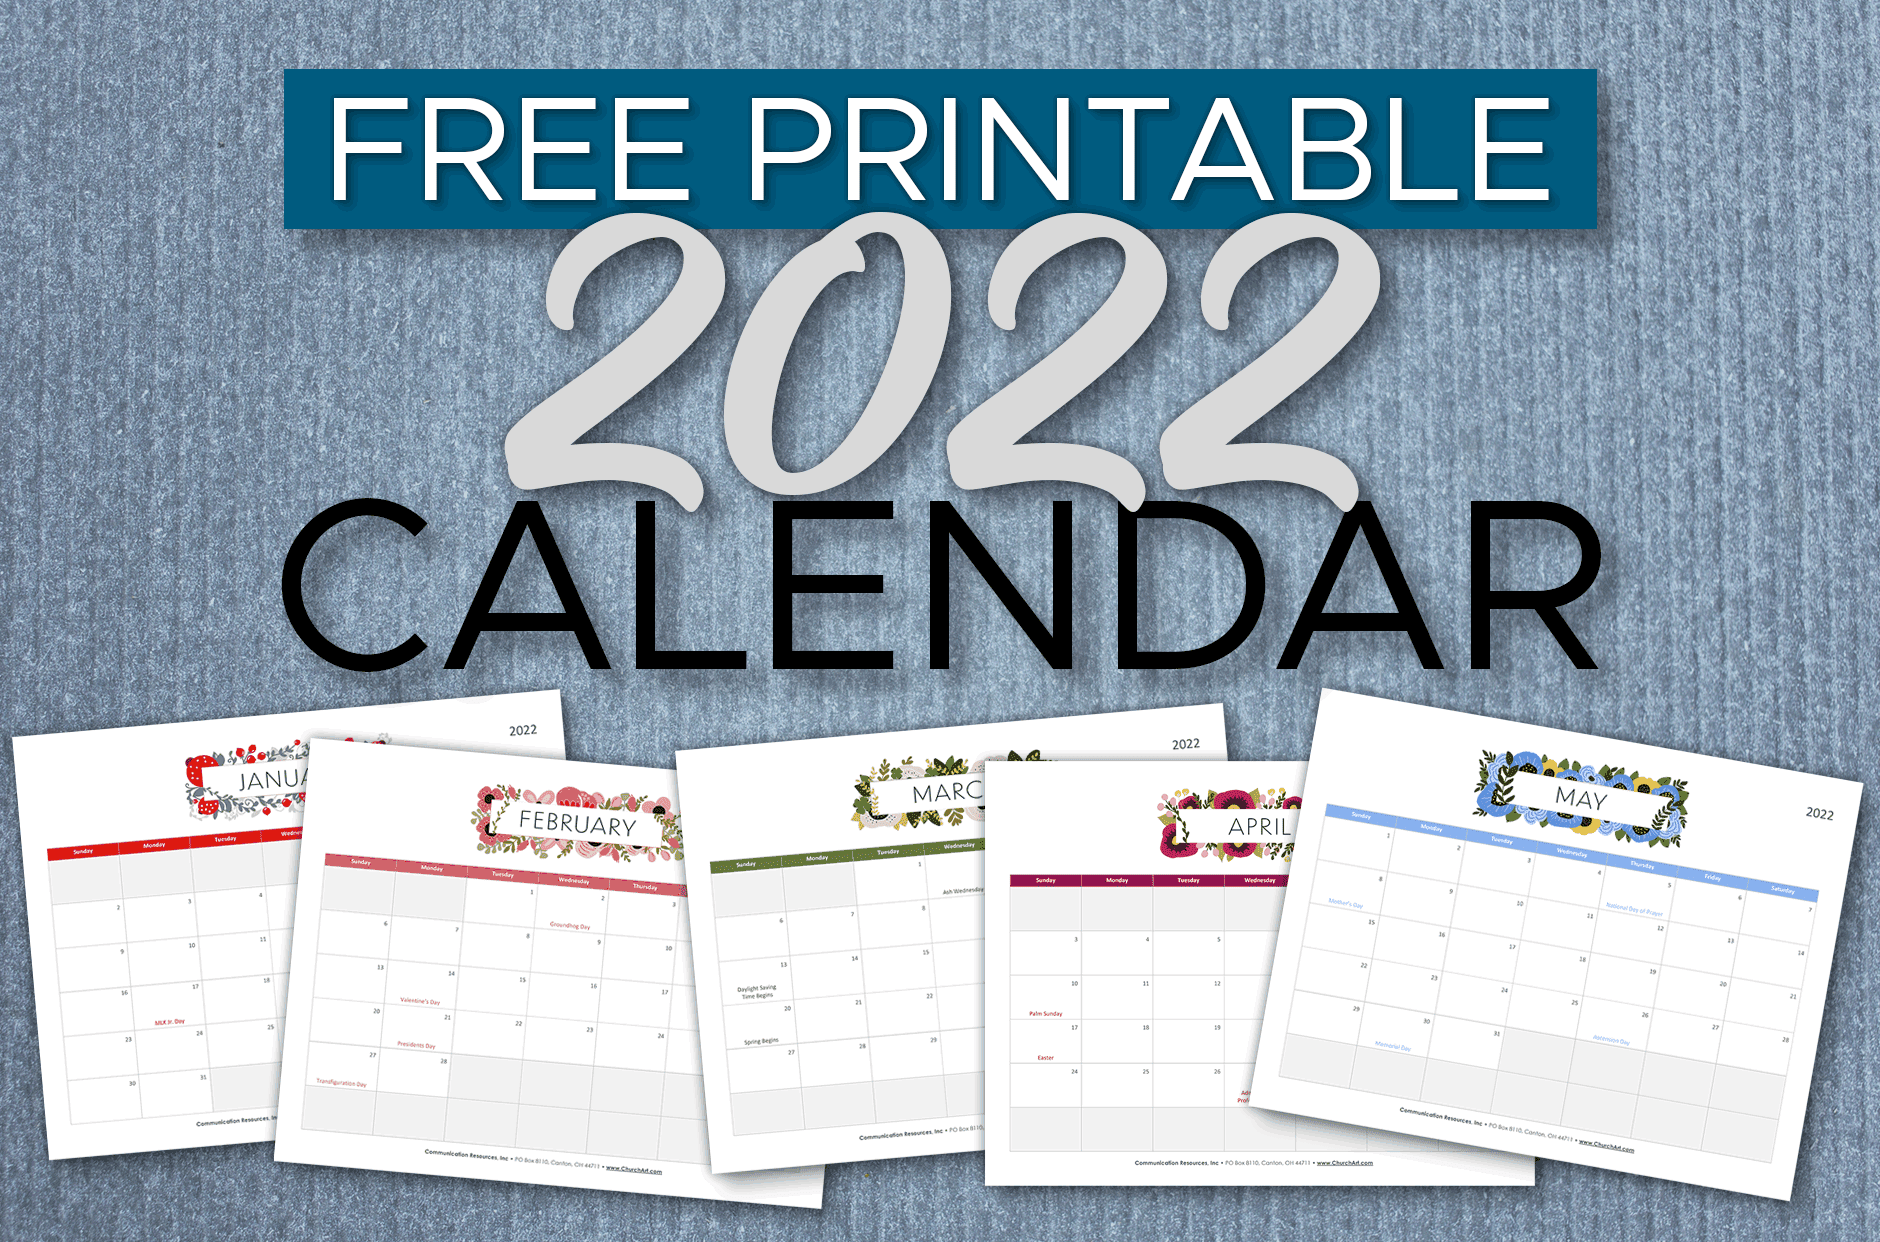 Printable Calendar 2022 Free Free Printable 2022 Church Calendar | Churchart.com Blog